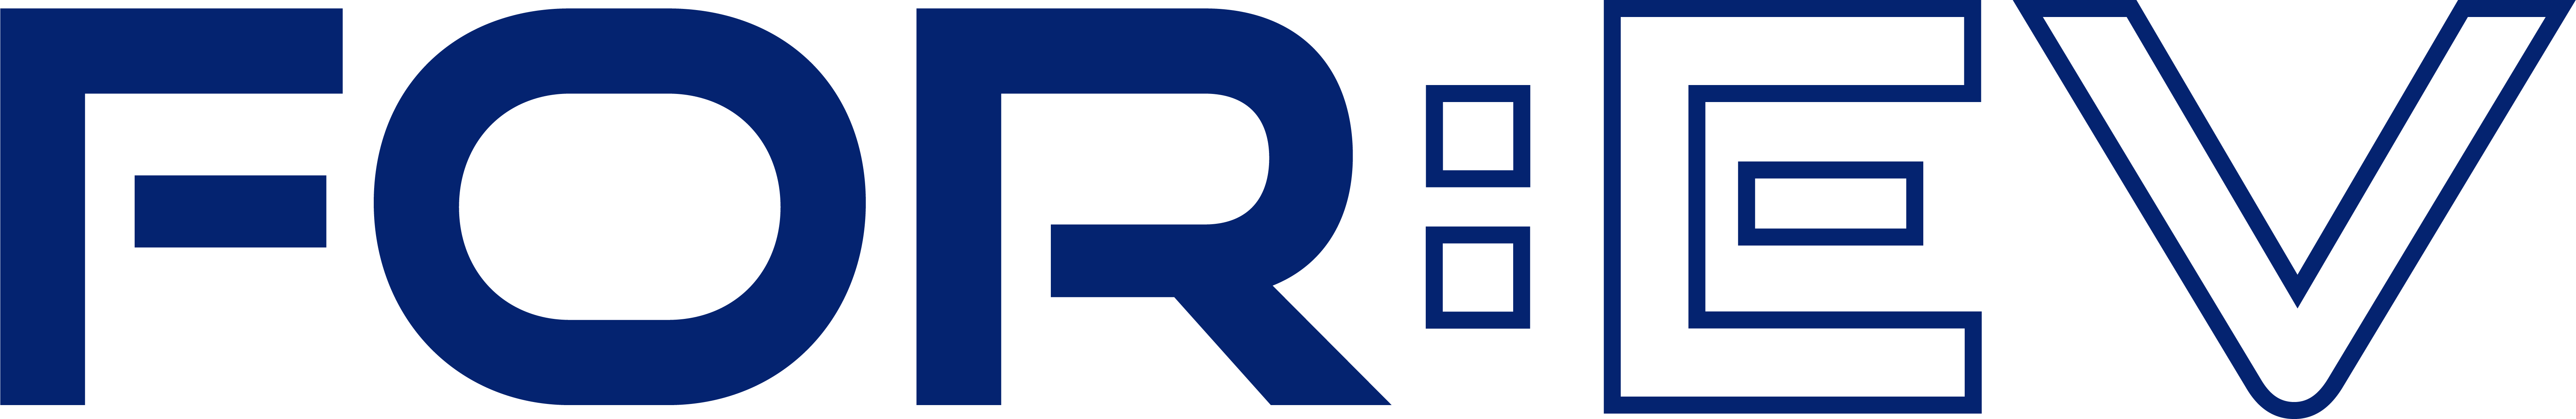 FOR:EV logo